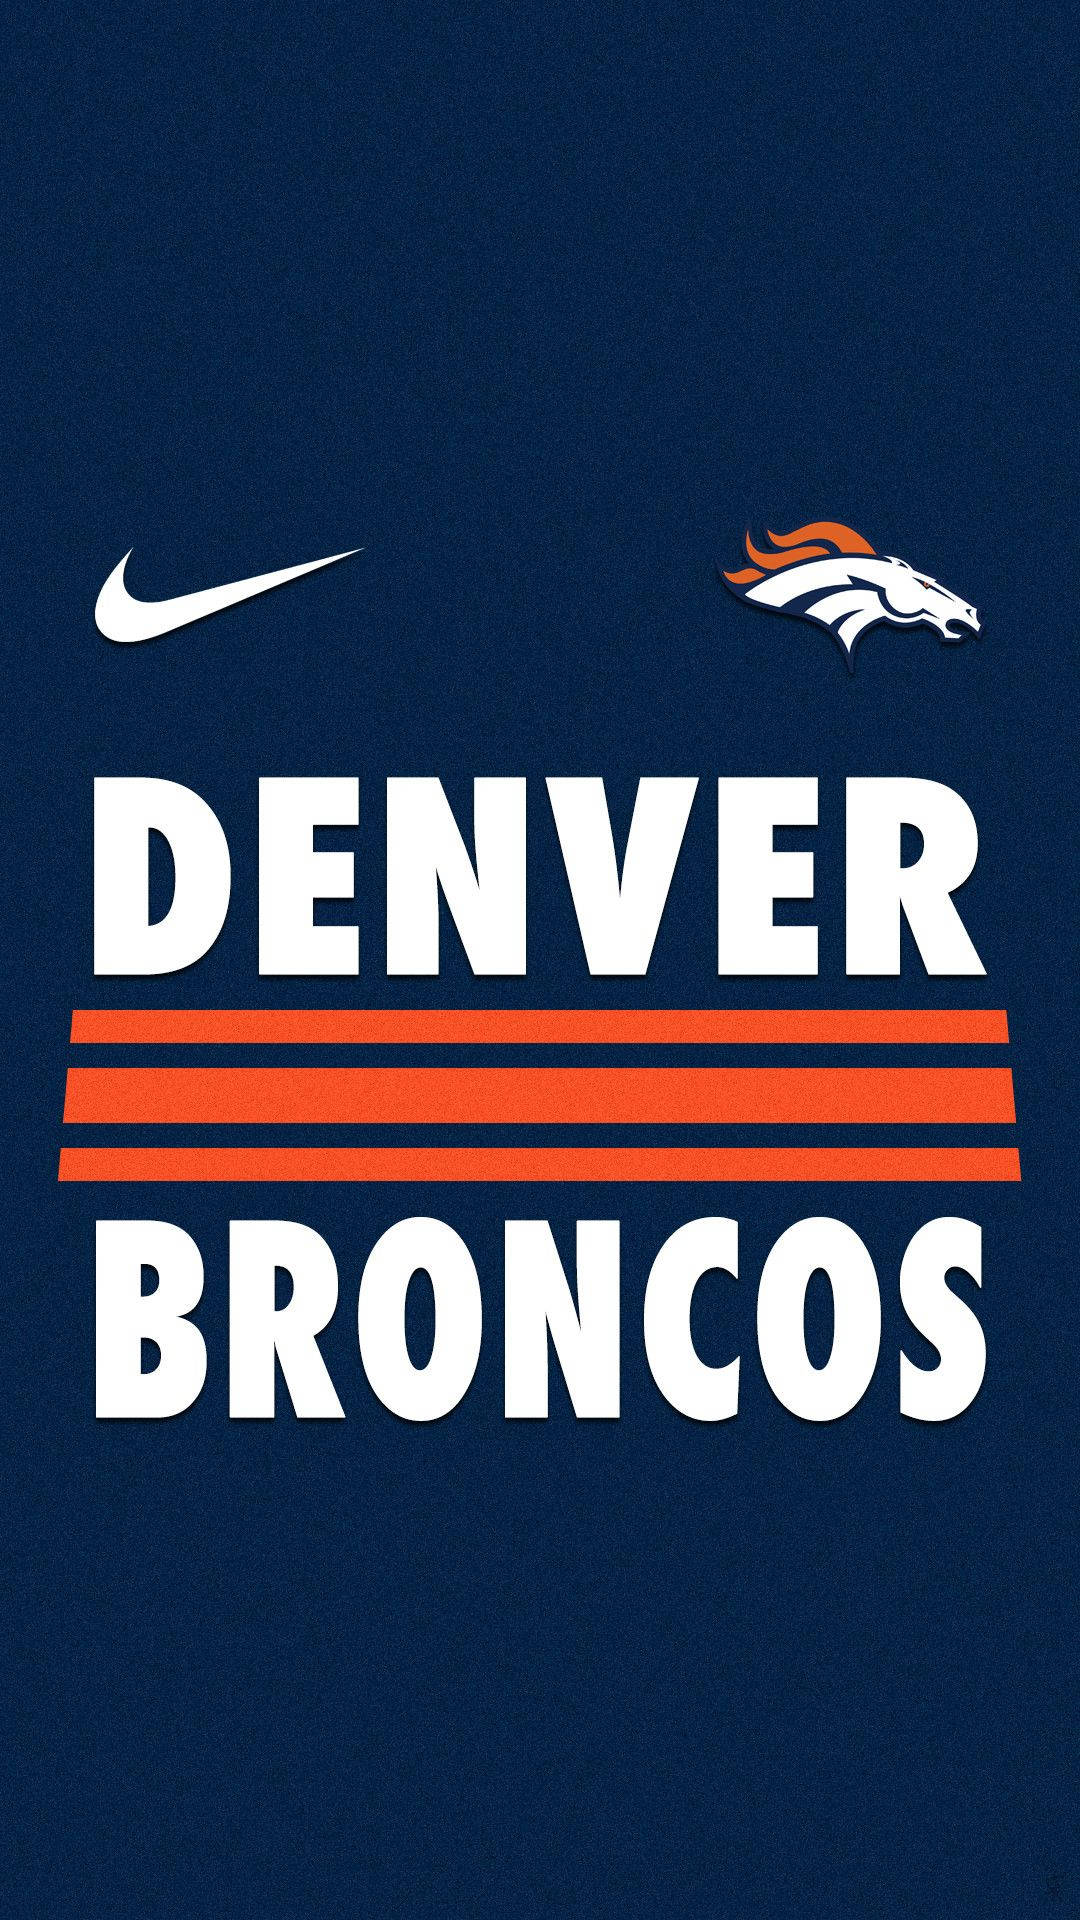 Denver Broncos 1080X1920 Wallpaper and Background Image